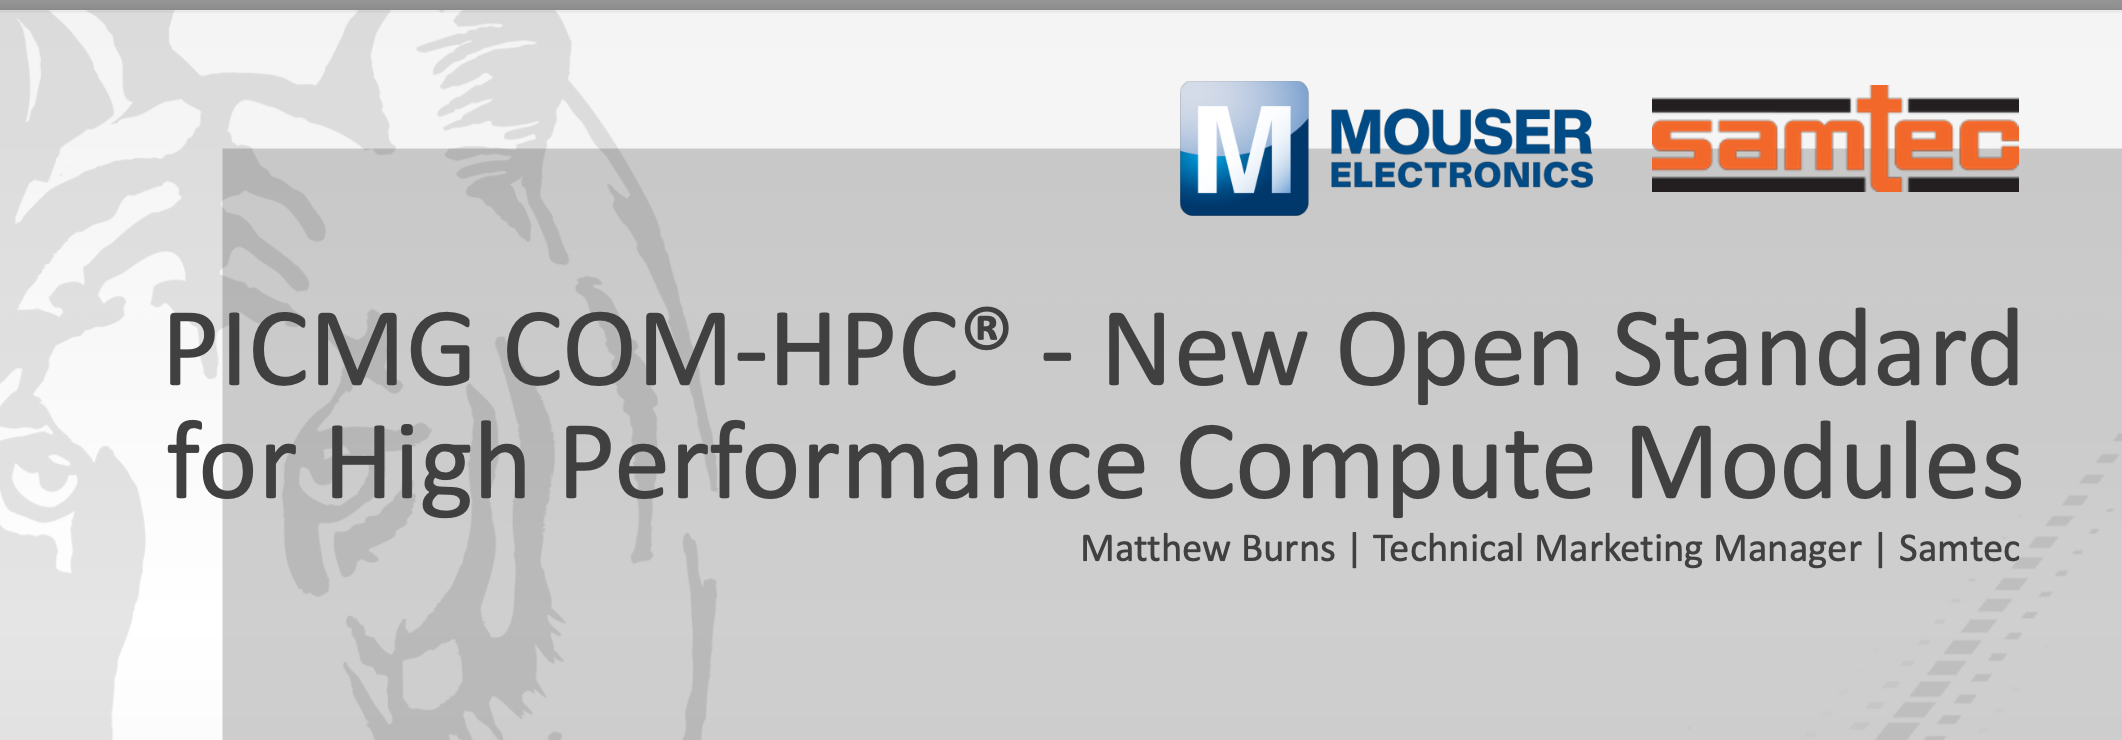 Webinar PICMG COM HPC® New Open Standard for High Performance Compute Modules